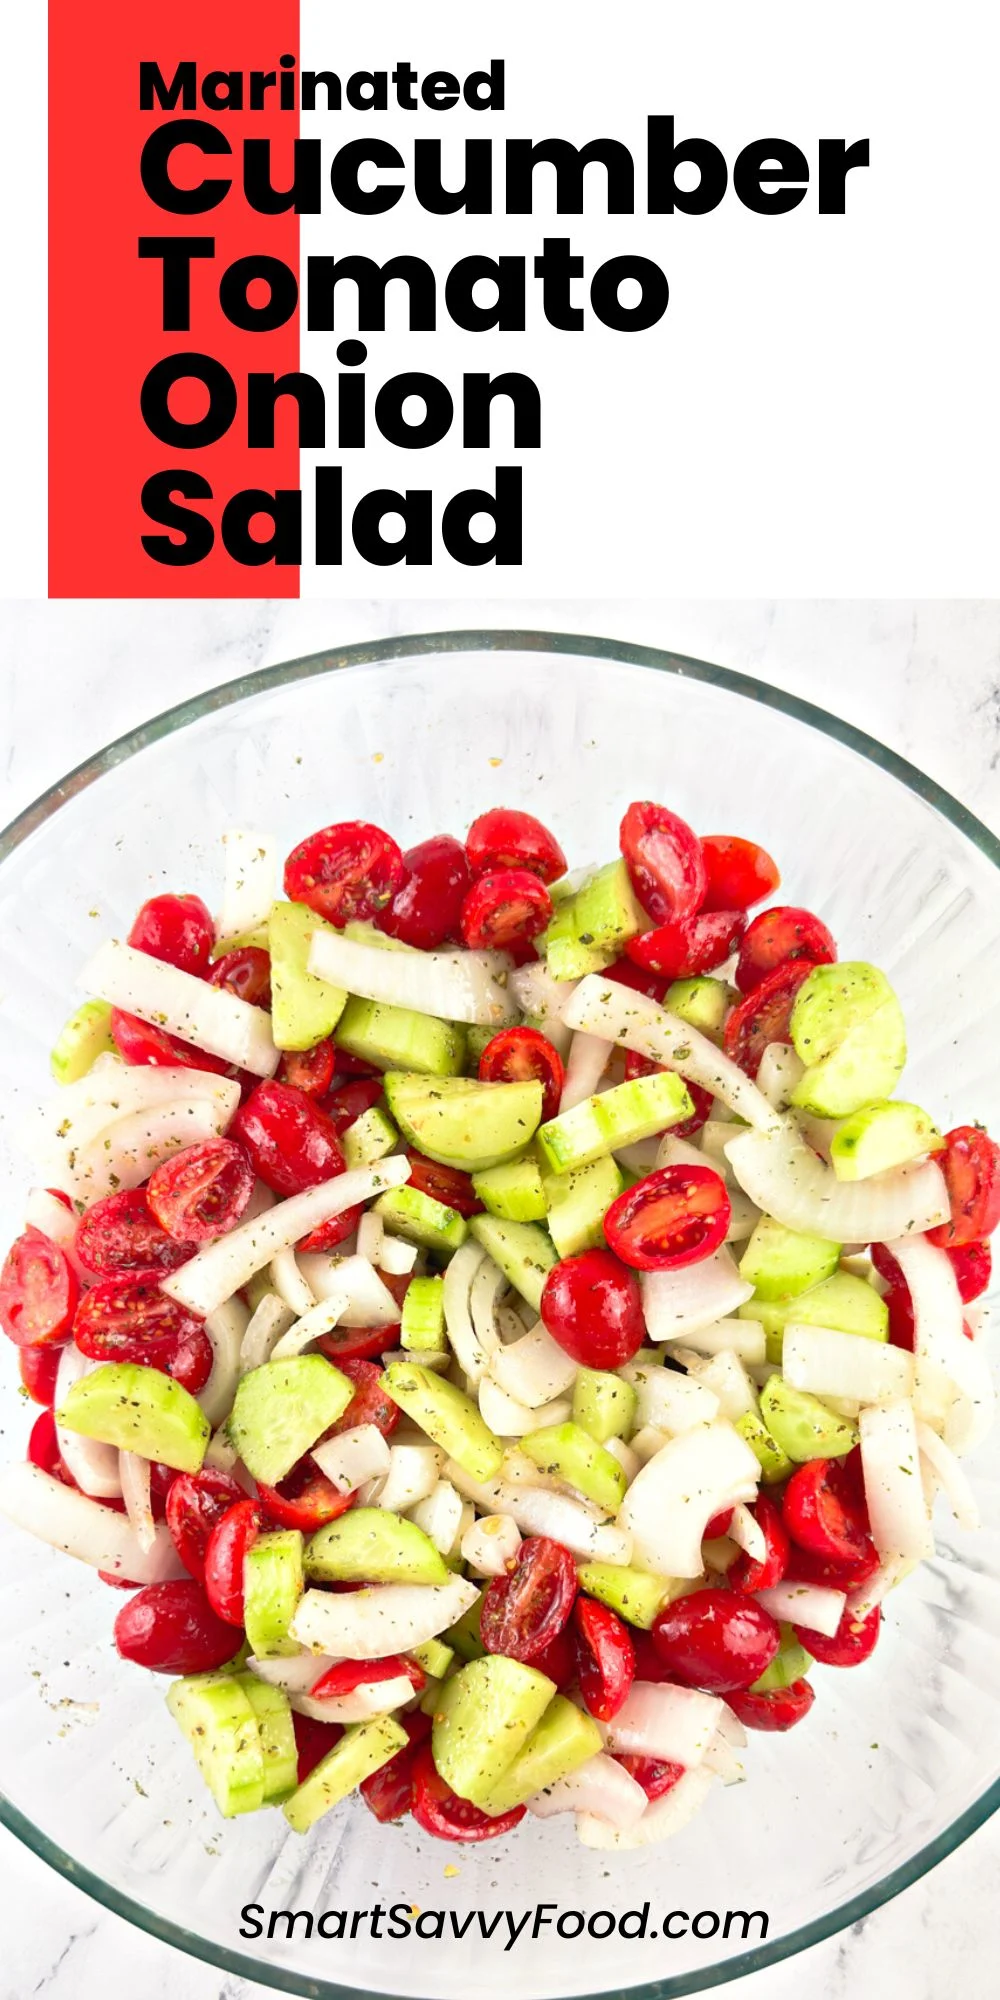 Pinterest image for marinated cucumber tomato onion salad.